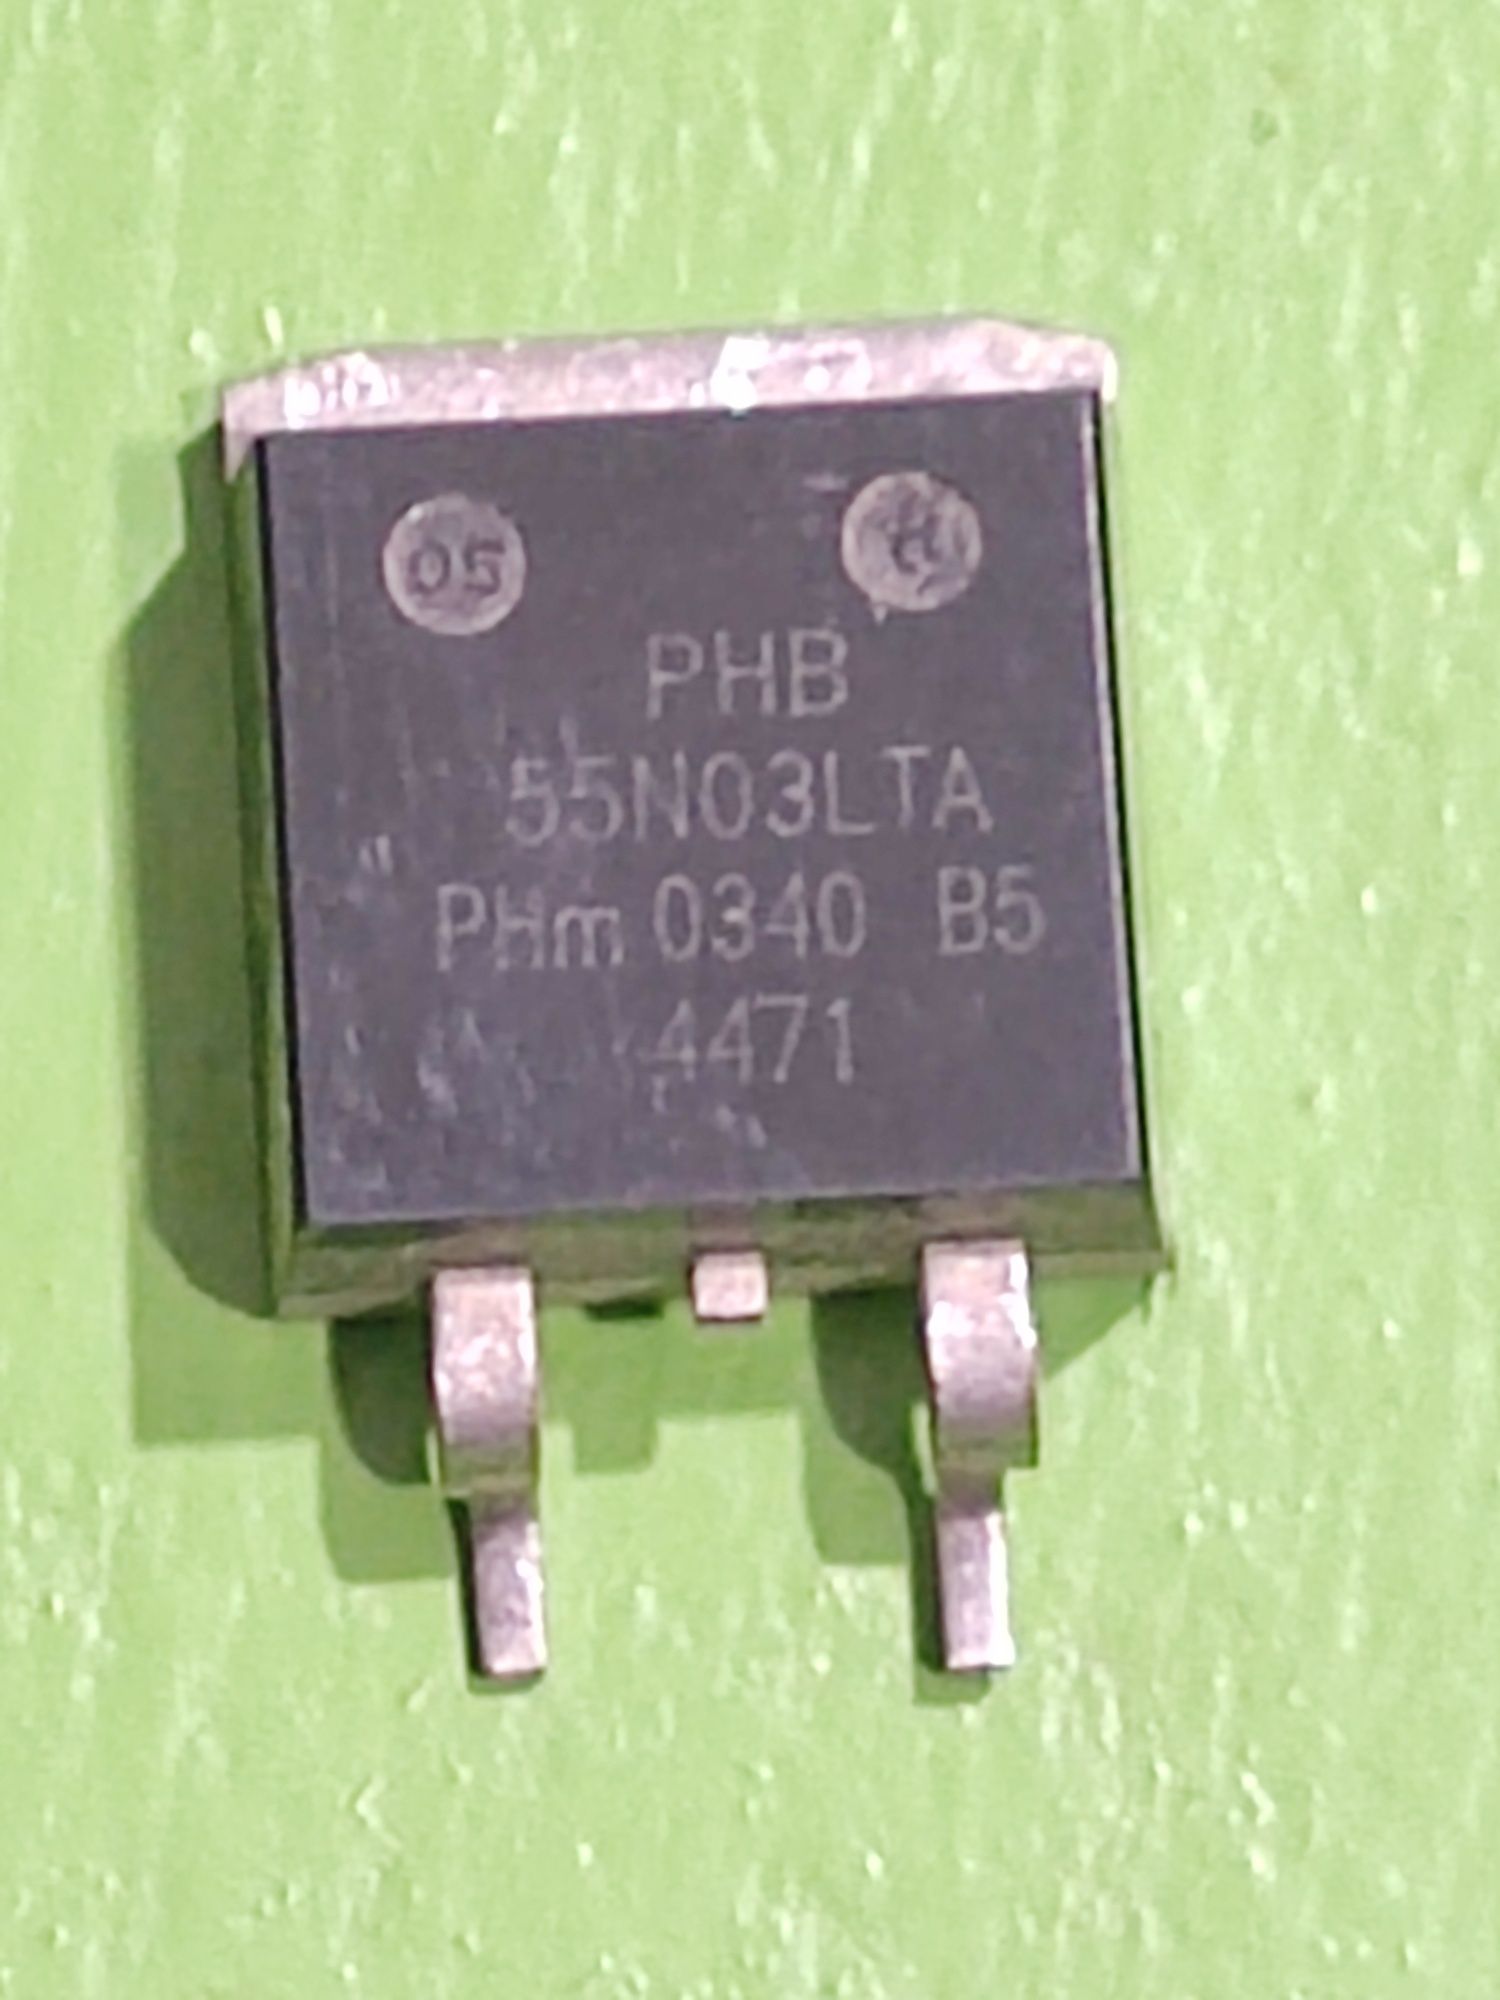 Tranzistor  55N03 LTA